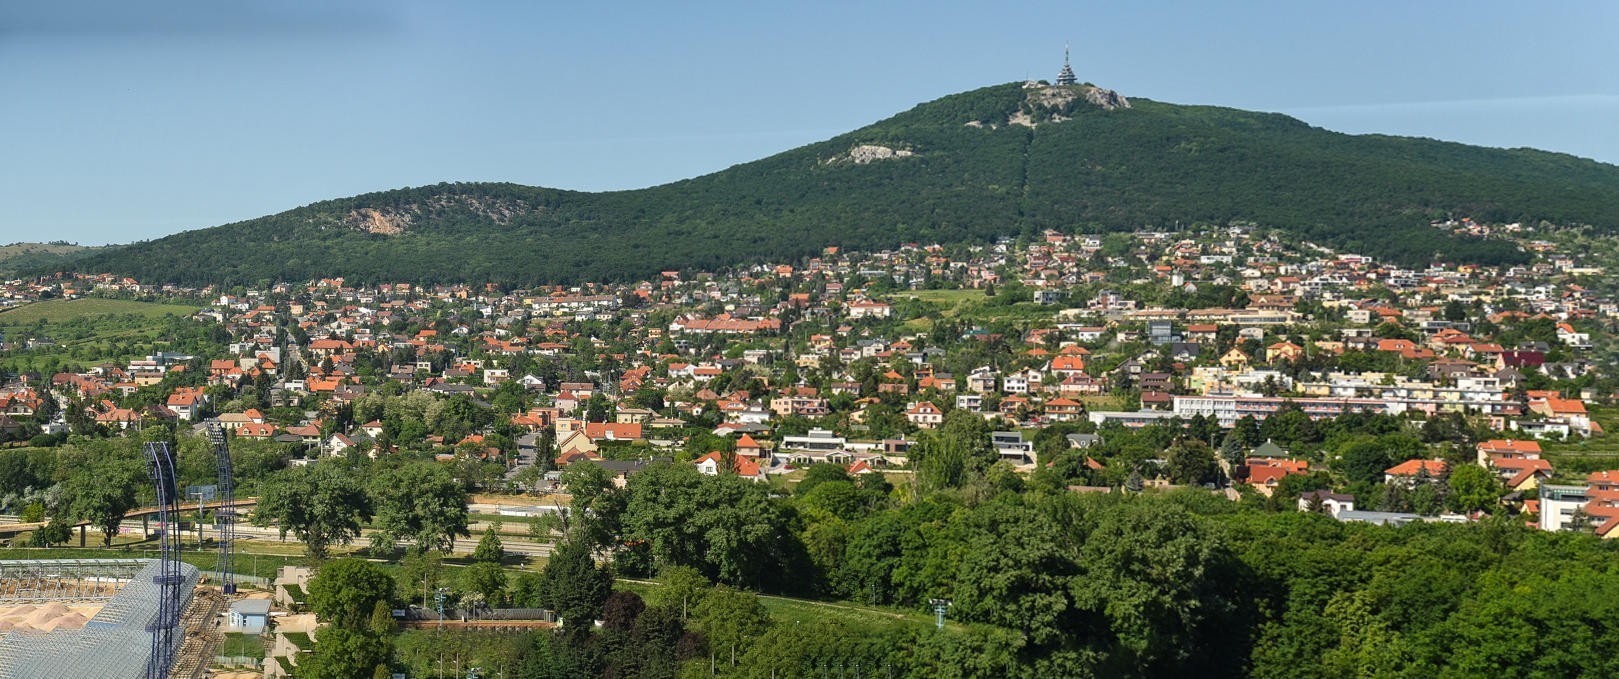 41pan - Benát, Nitra i Topoľčianky, czyli powrót z gór